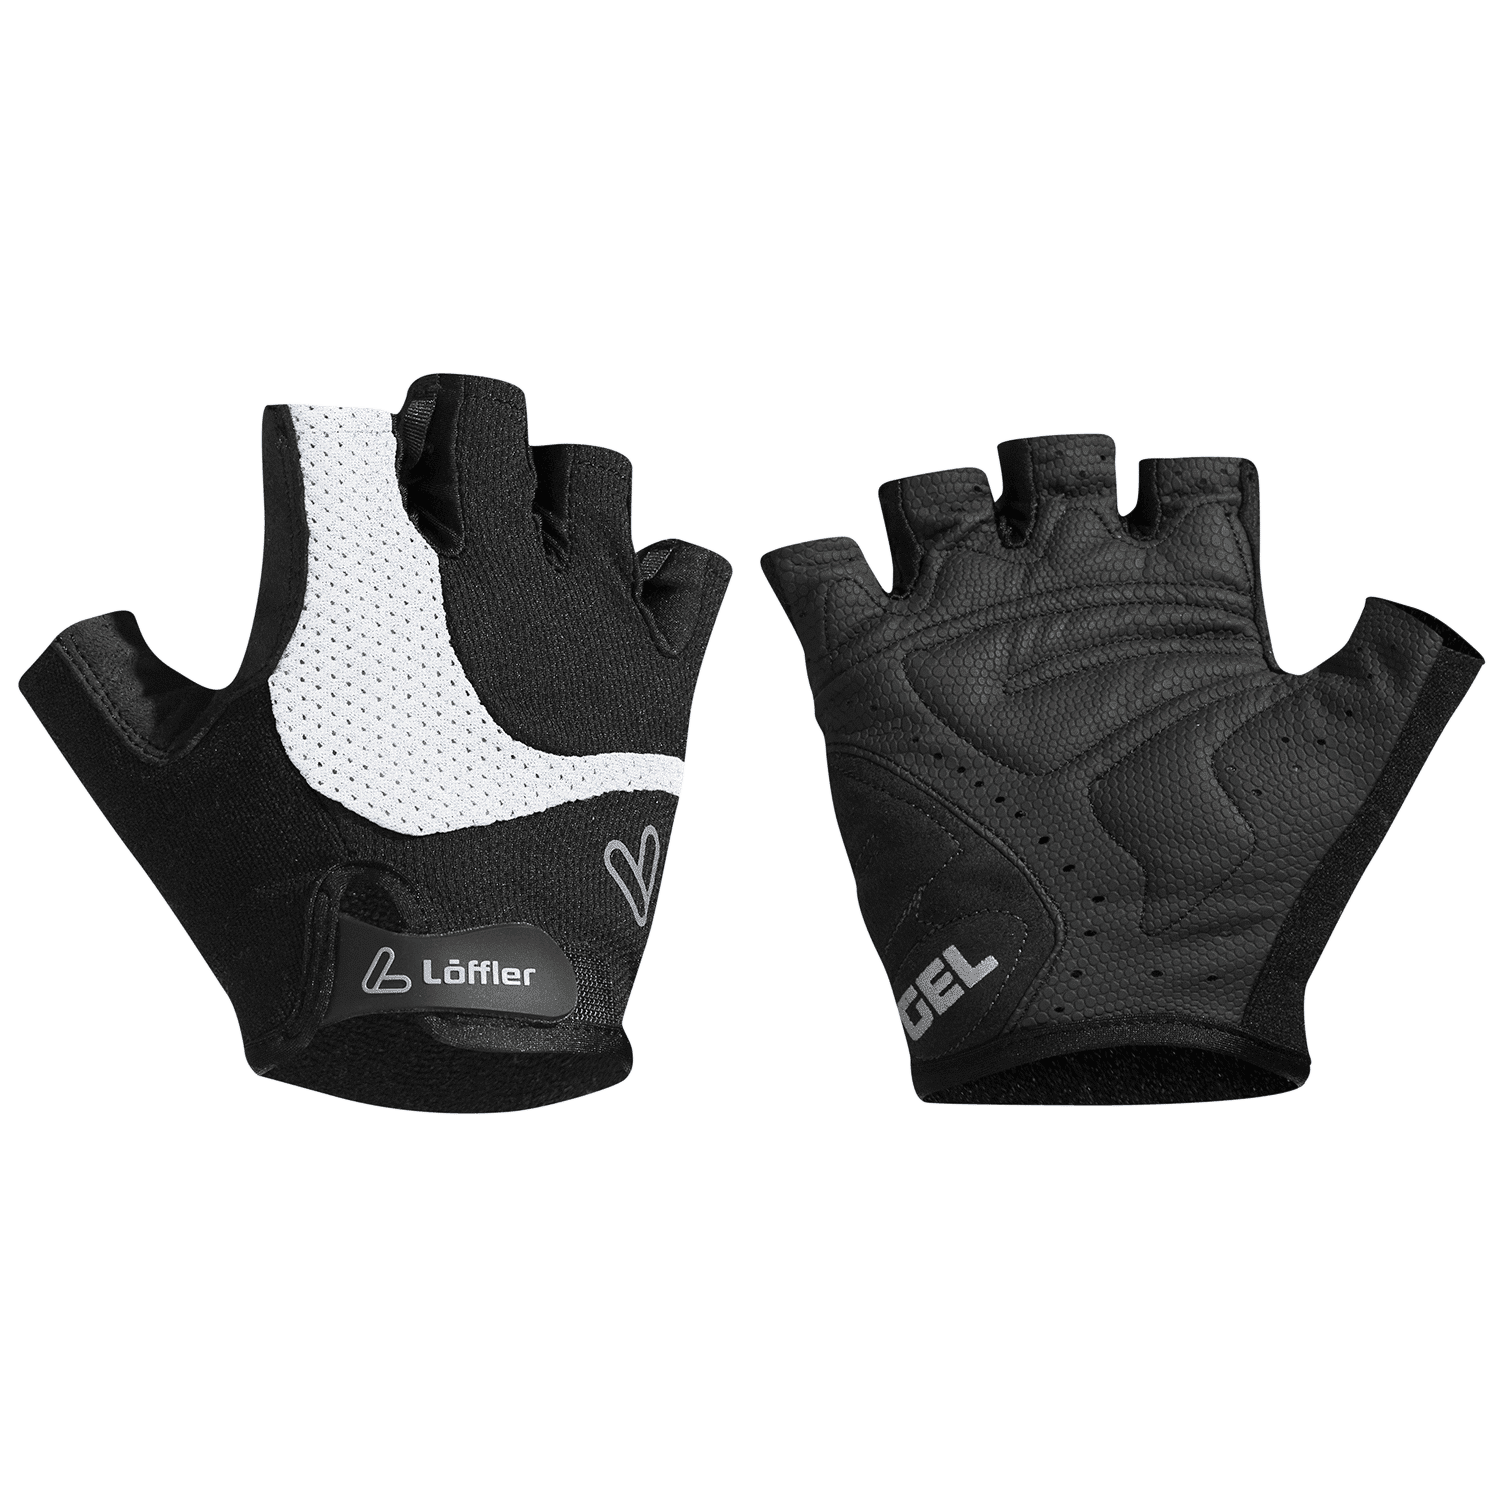 Löffler Bike Gloves Gel - Cycling gloves